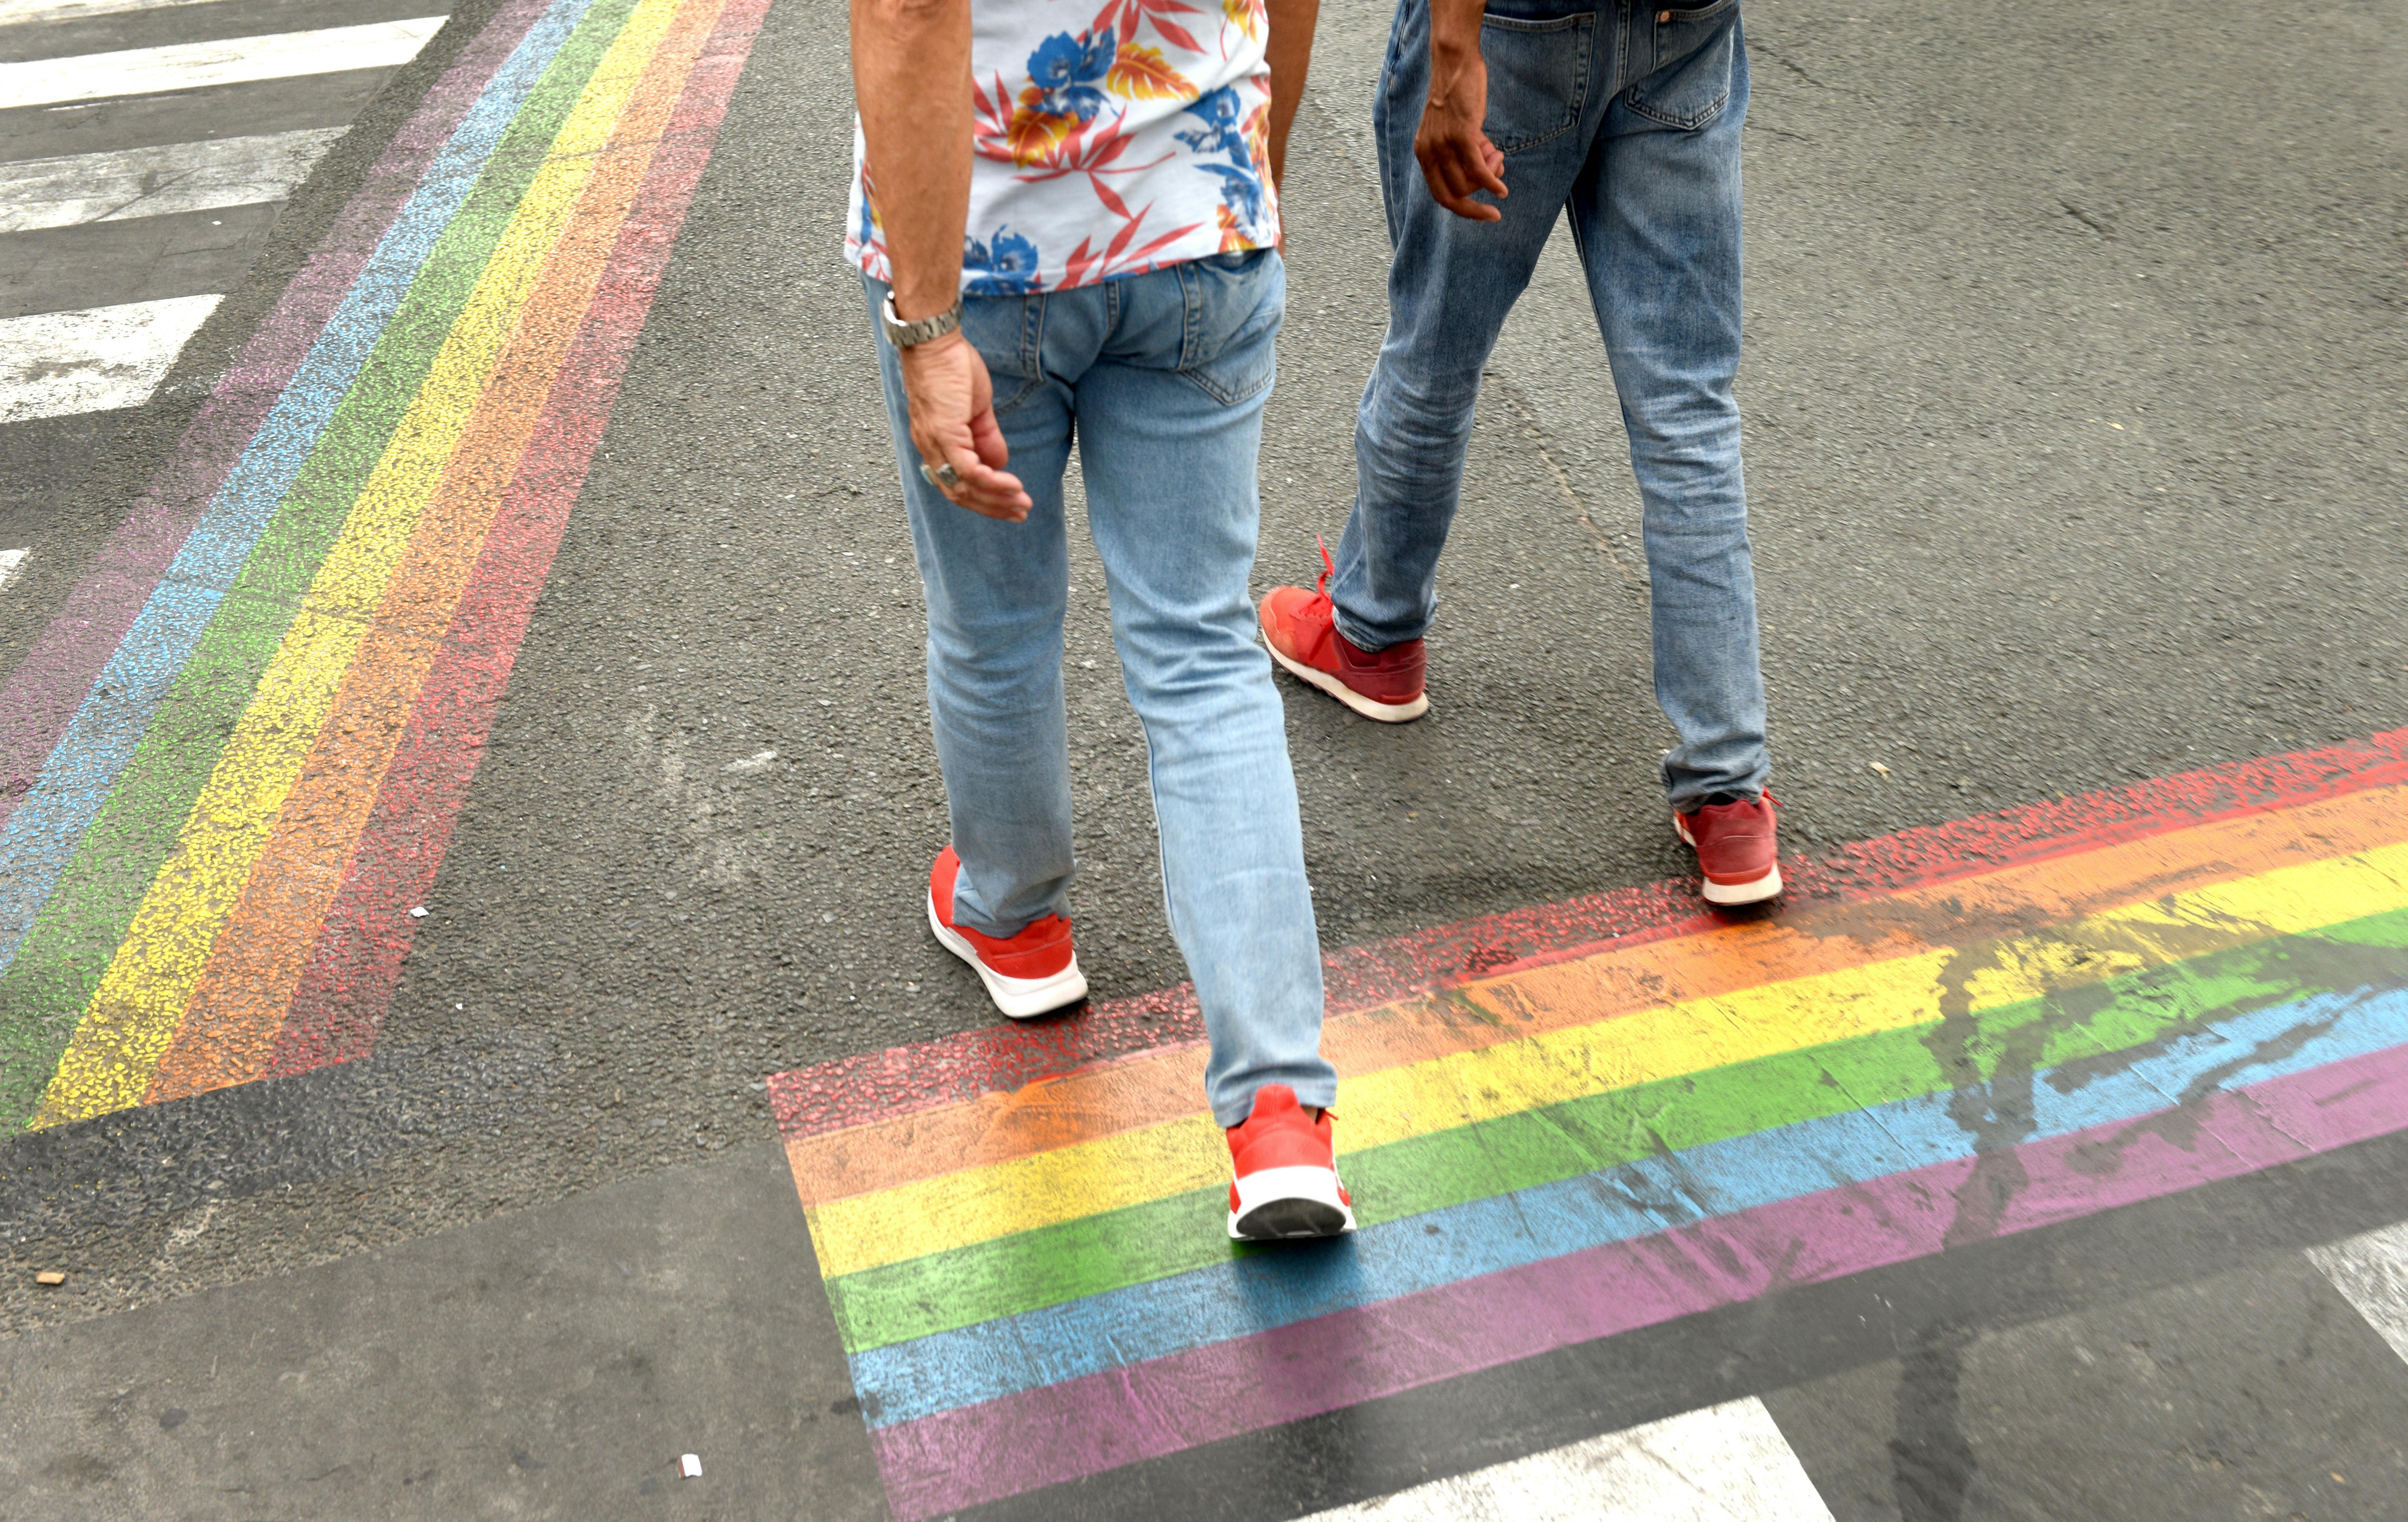 Visite guidée du quartier gay de Paris